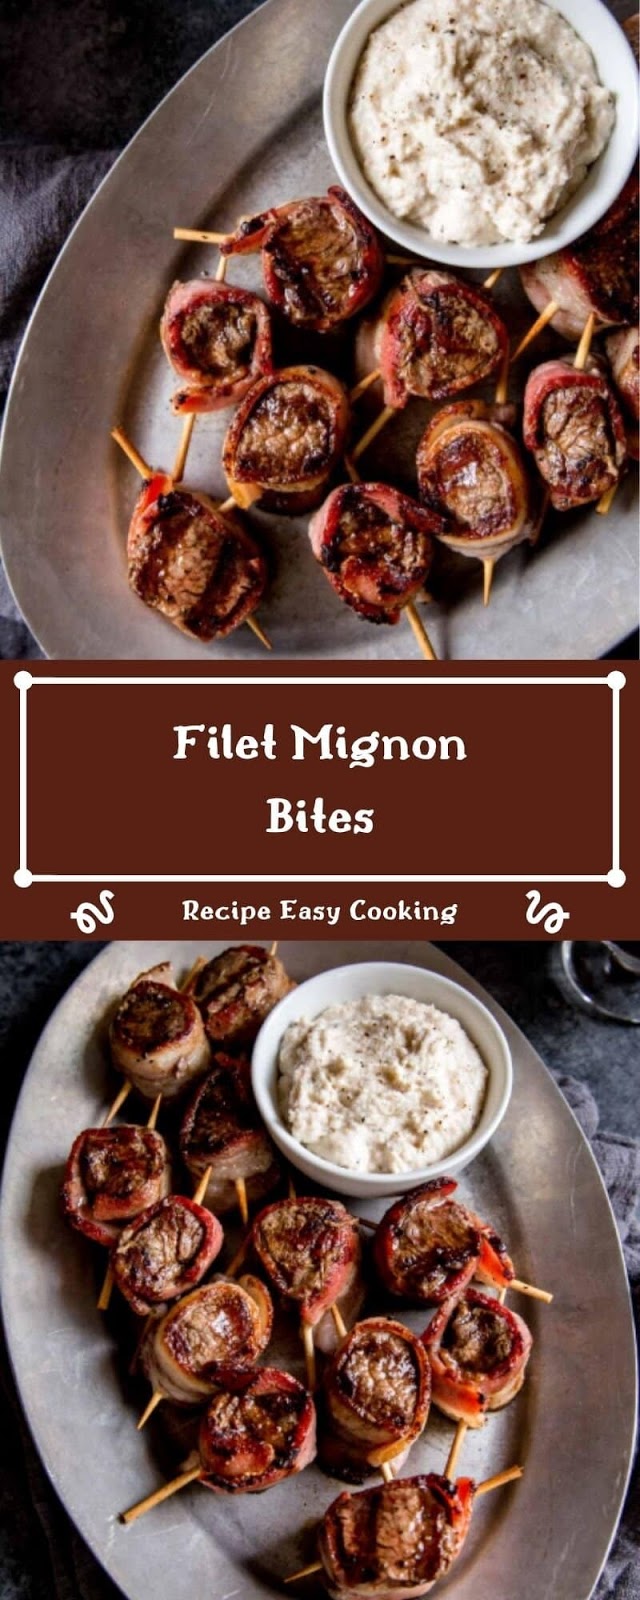 Filet Mignon Bites With Creamy Horseradish Sauce